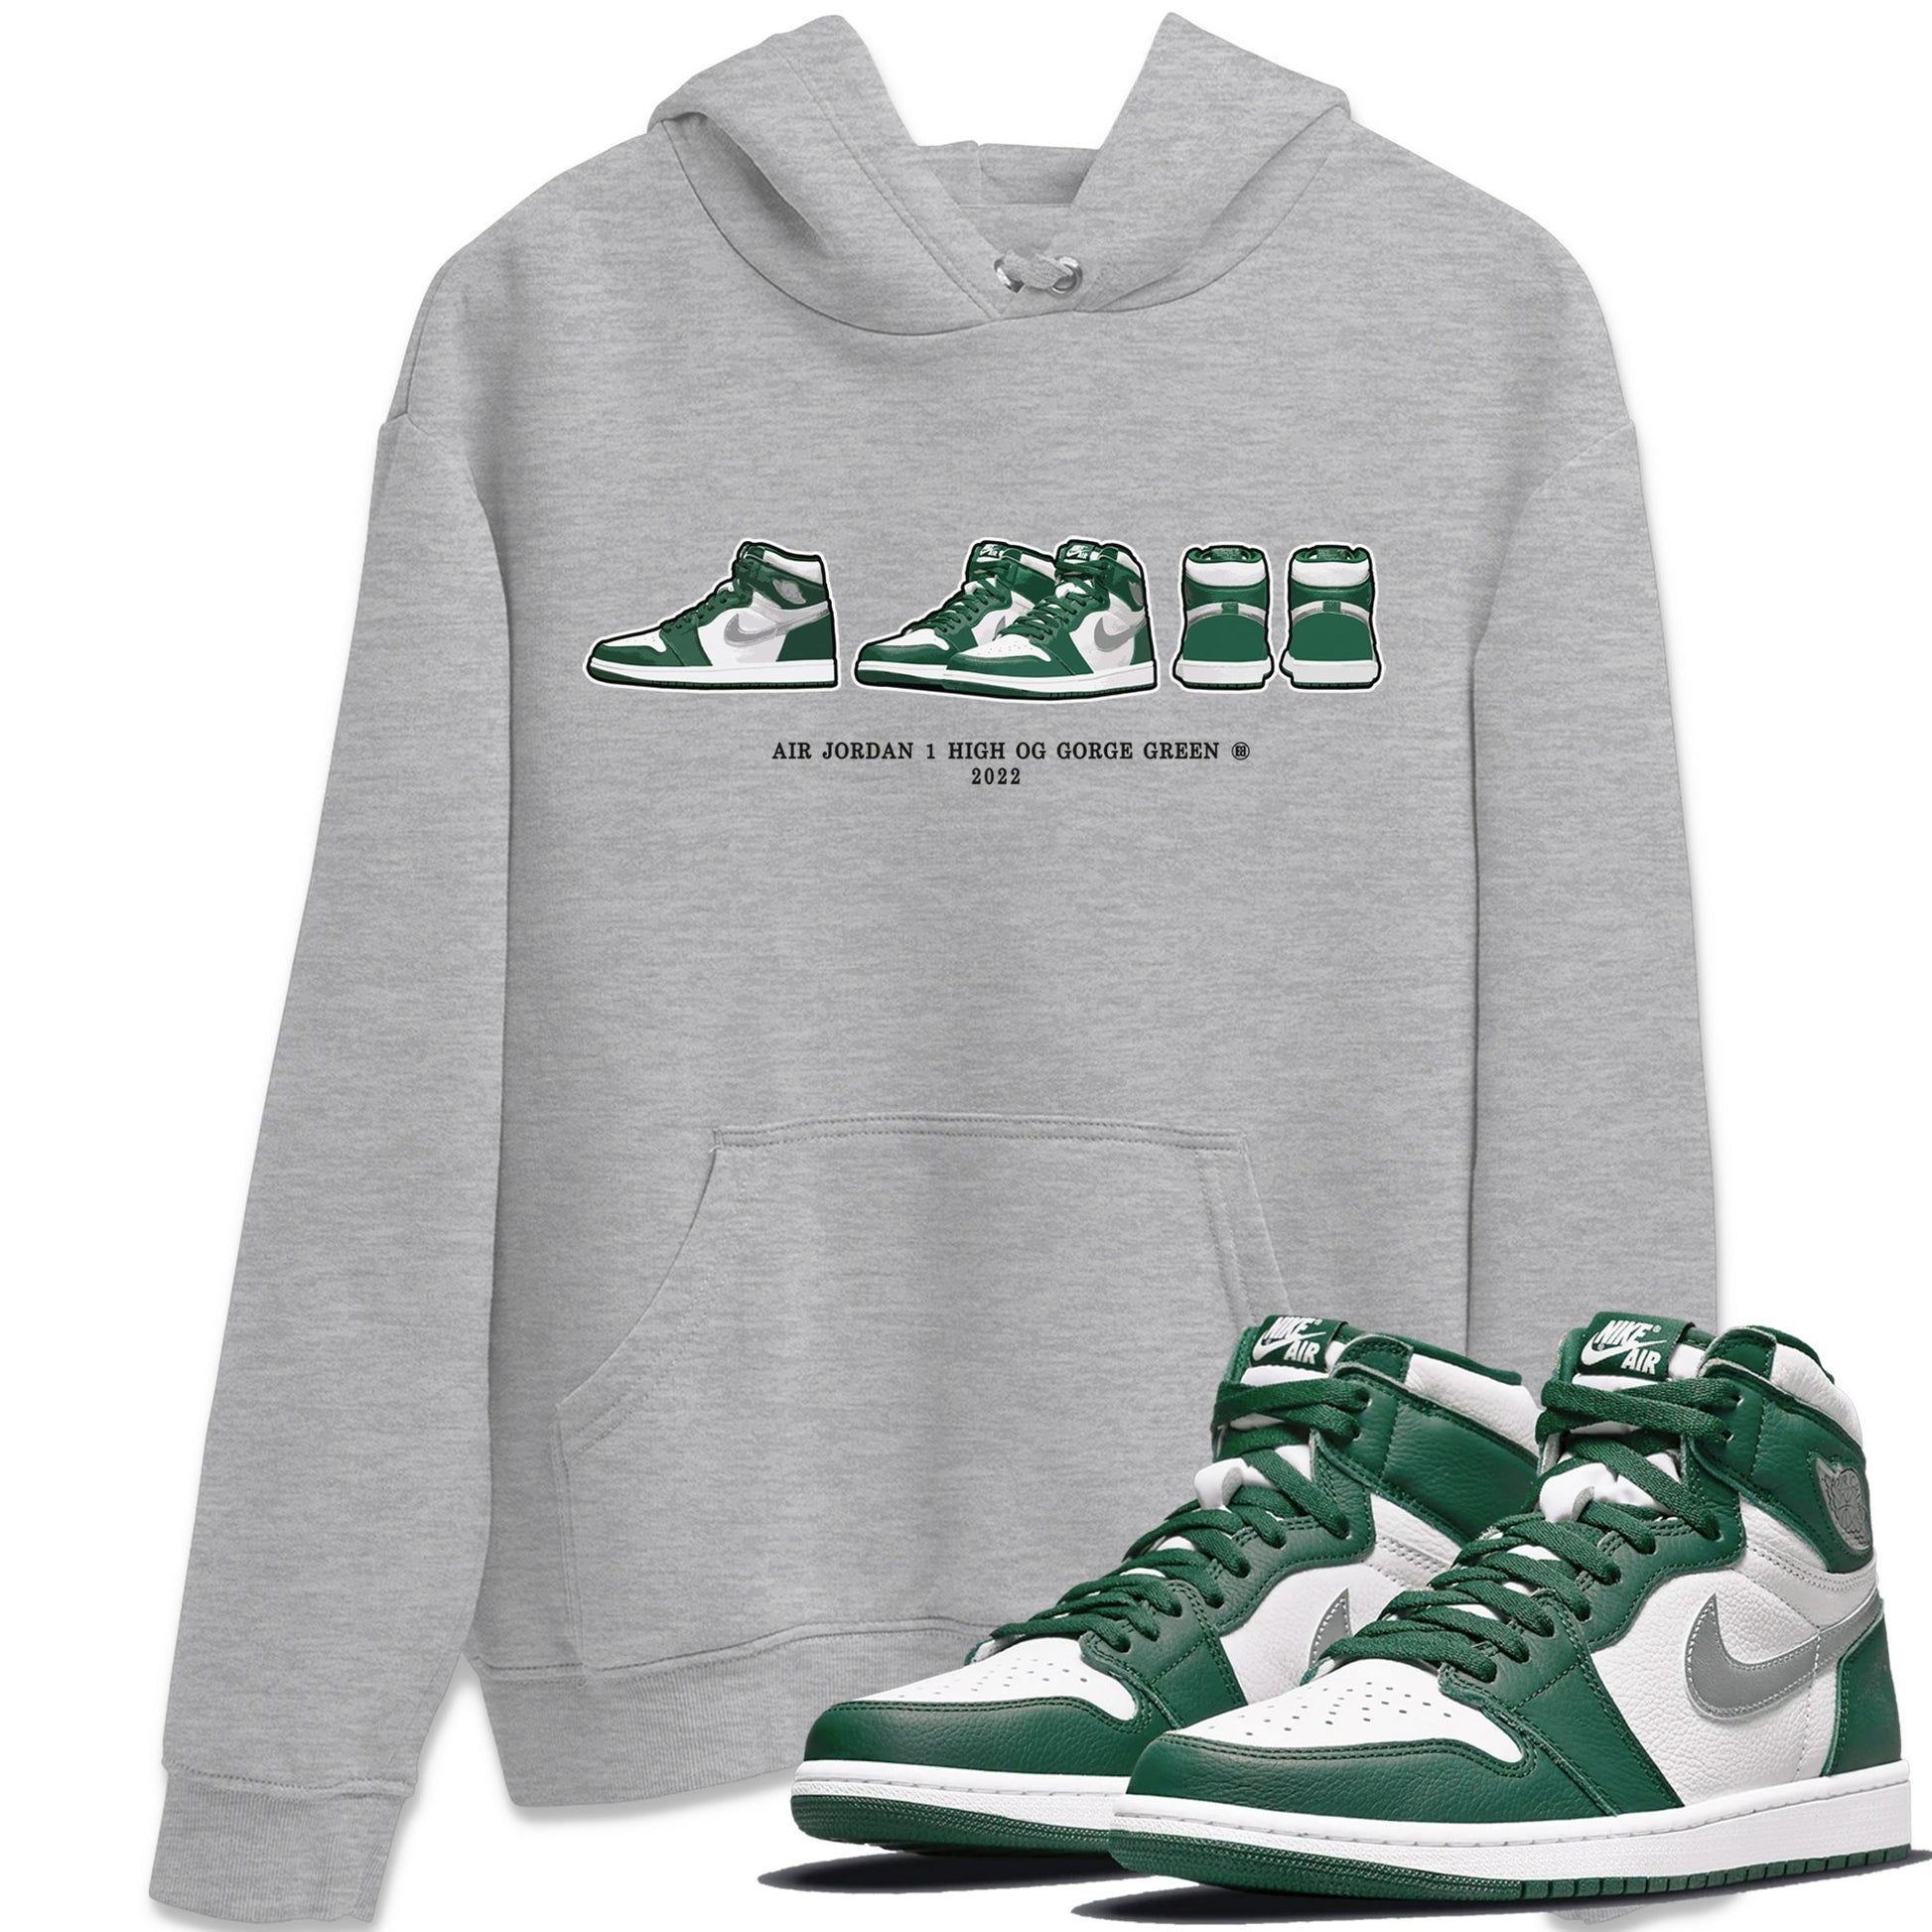 Jordan 1 Gorge Green Sneaker Match Tees Air Jordan 1 Prelude Sneaker Tees Jordan 1 Gorge Green Sneaker Release Tees Unisex Shirts